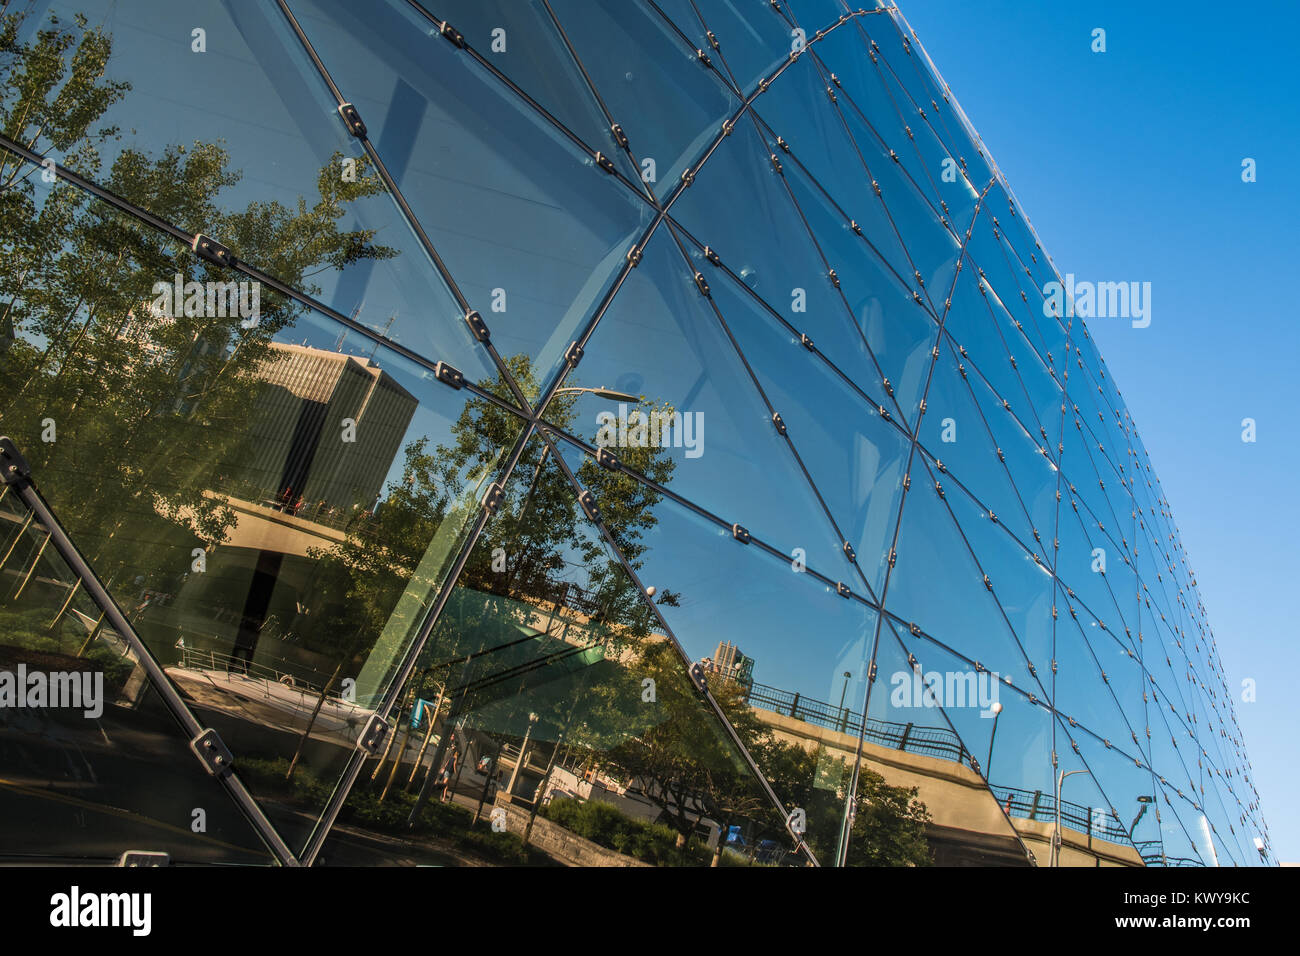 OTTAWA, ONTARIO / CANADA - URBAN LANDSCAPE. REFLECTIONS IN GLASS WALL. Stock Photo